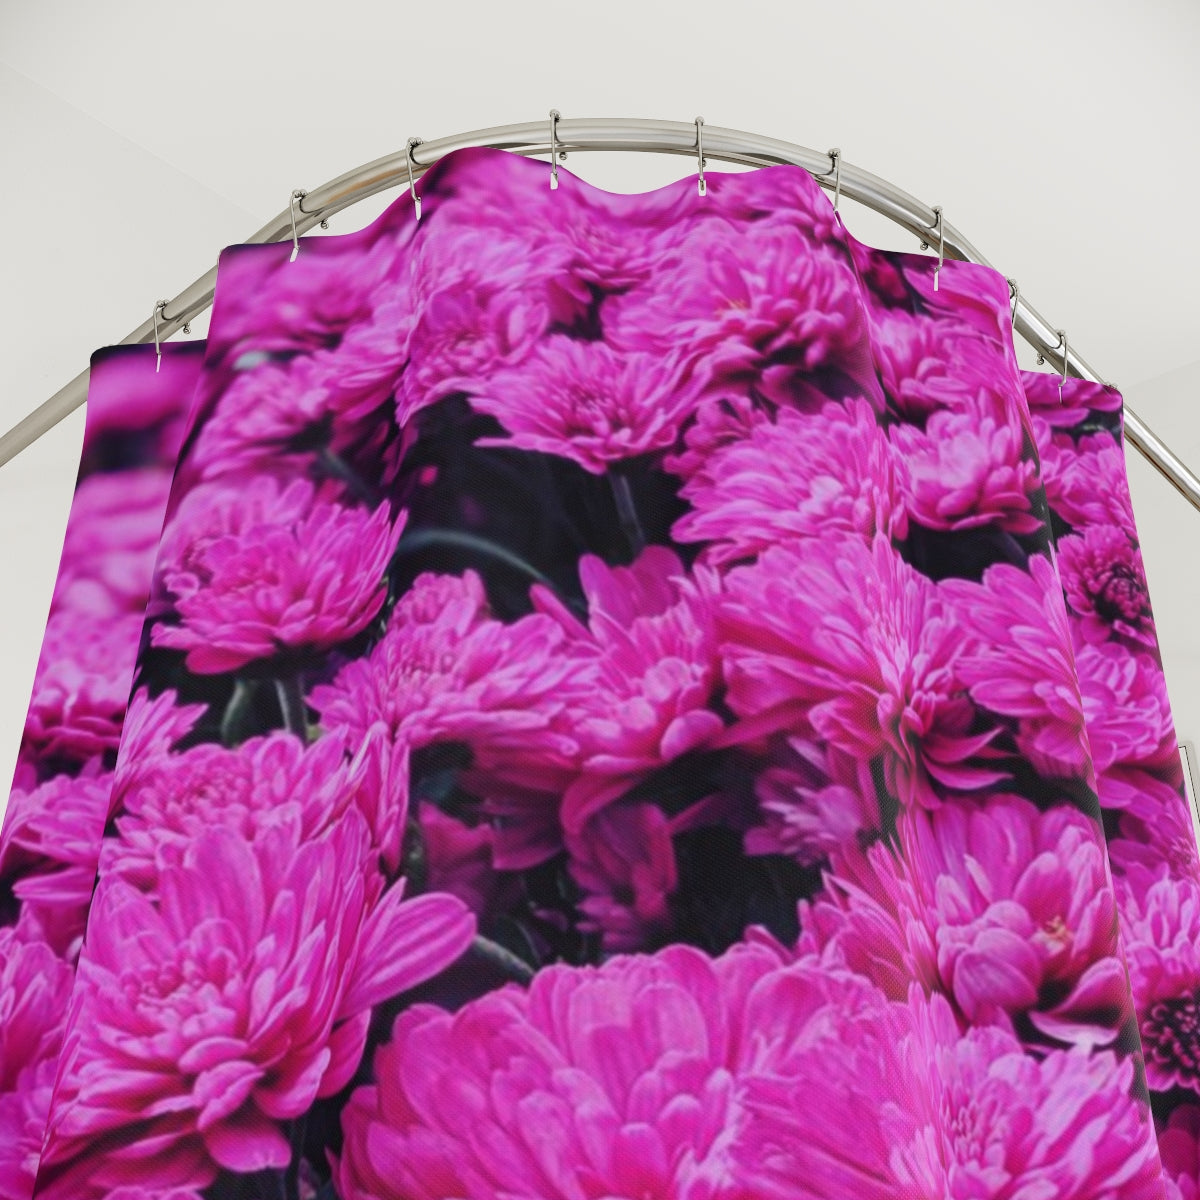 SSSS Pink Chrysanthemum Shower Curtain